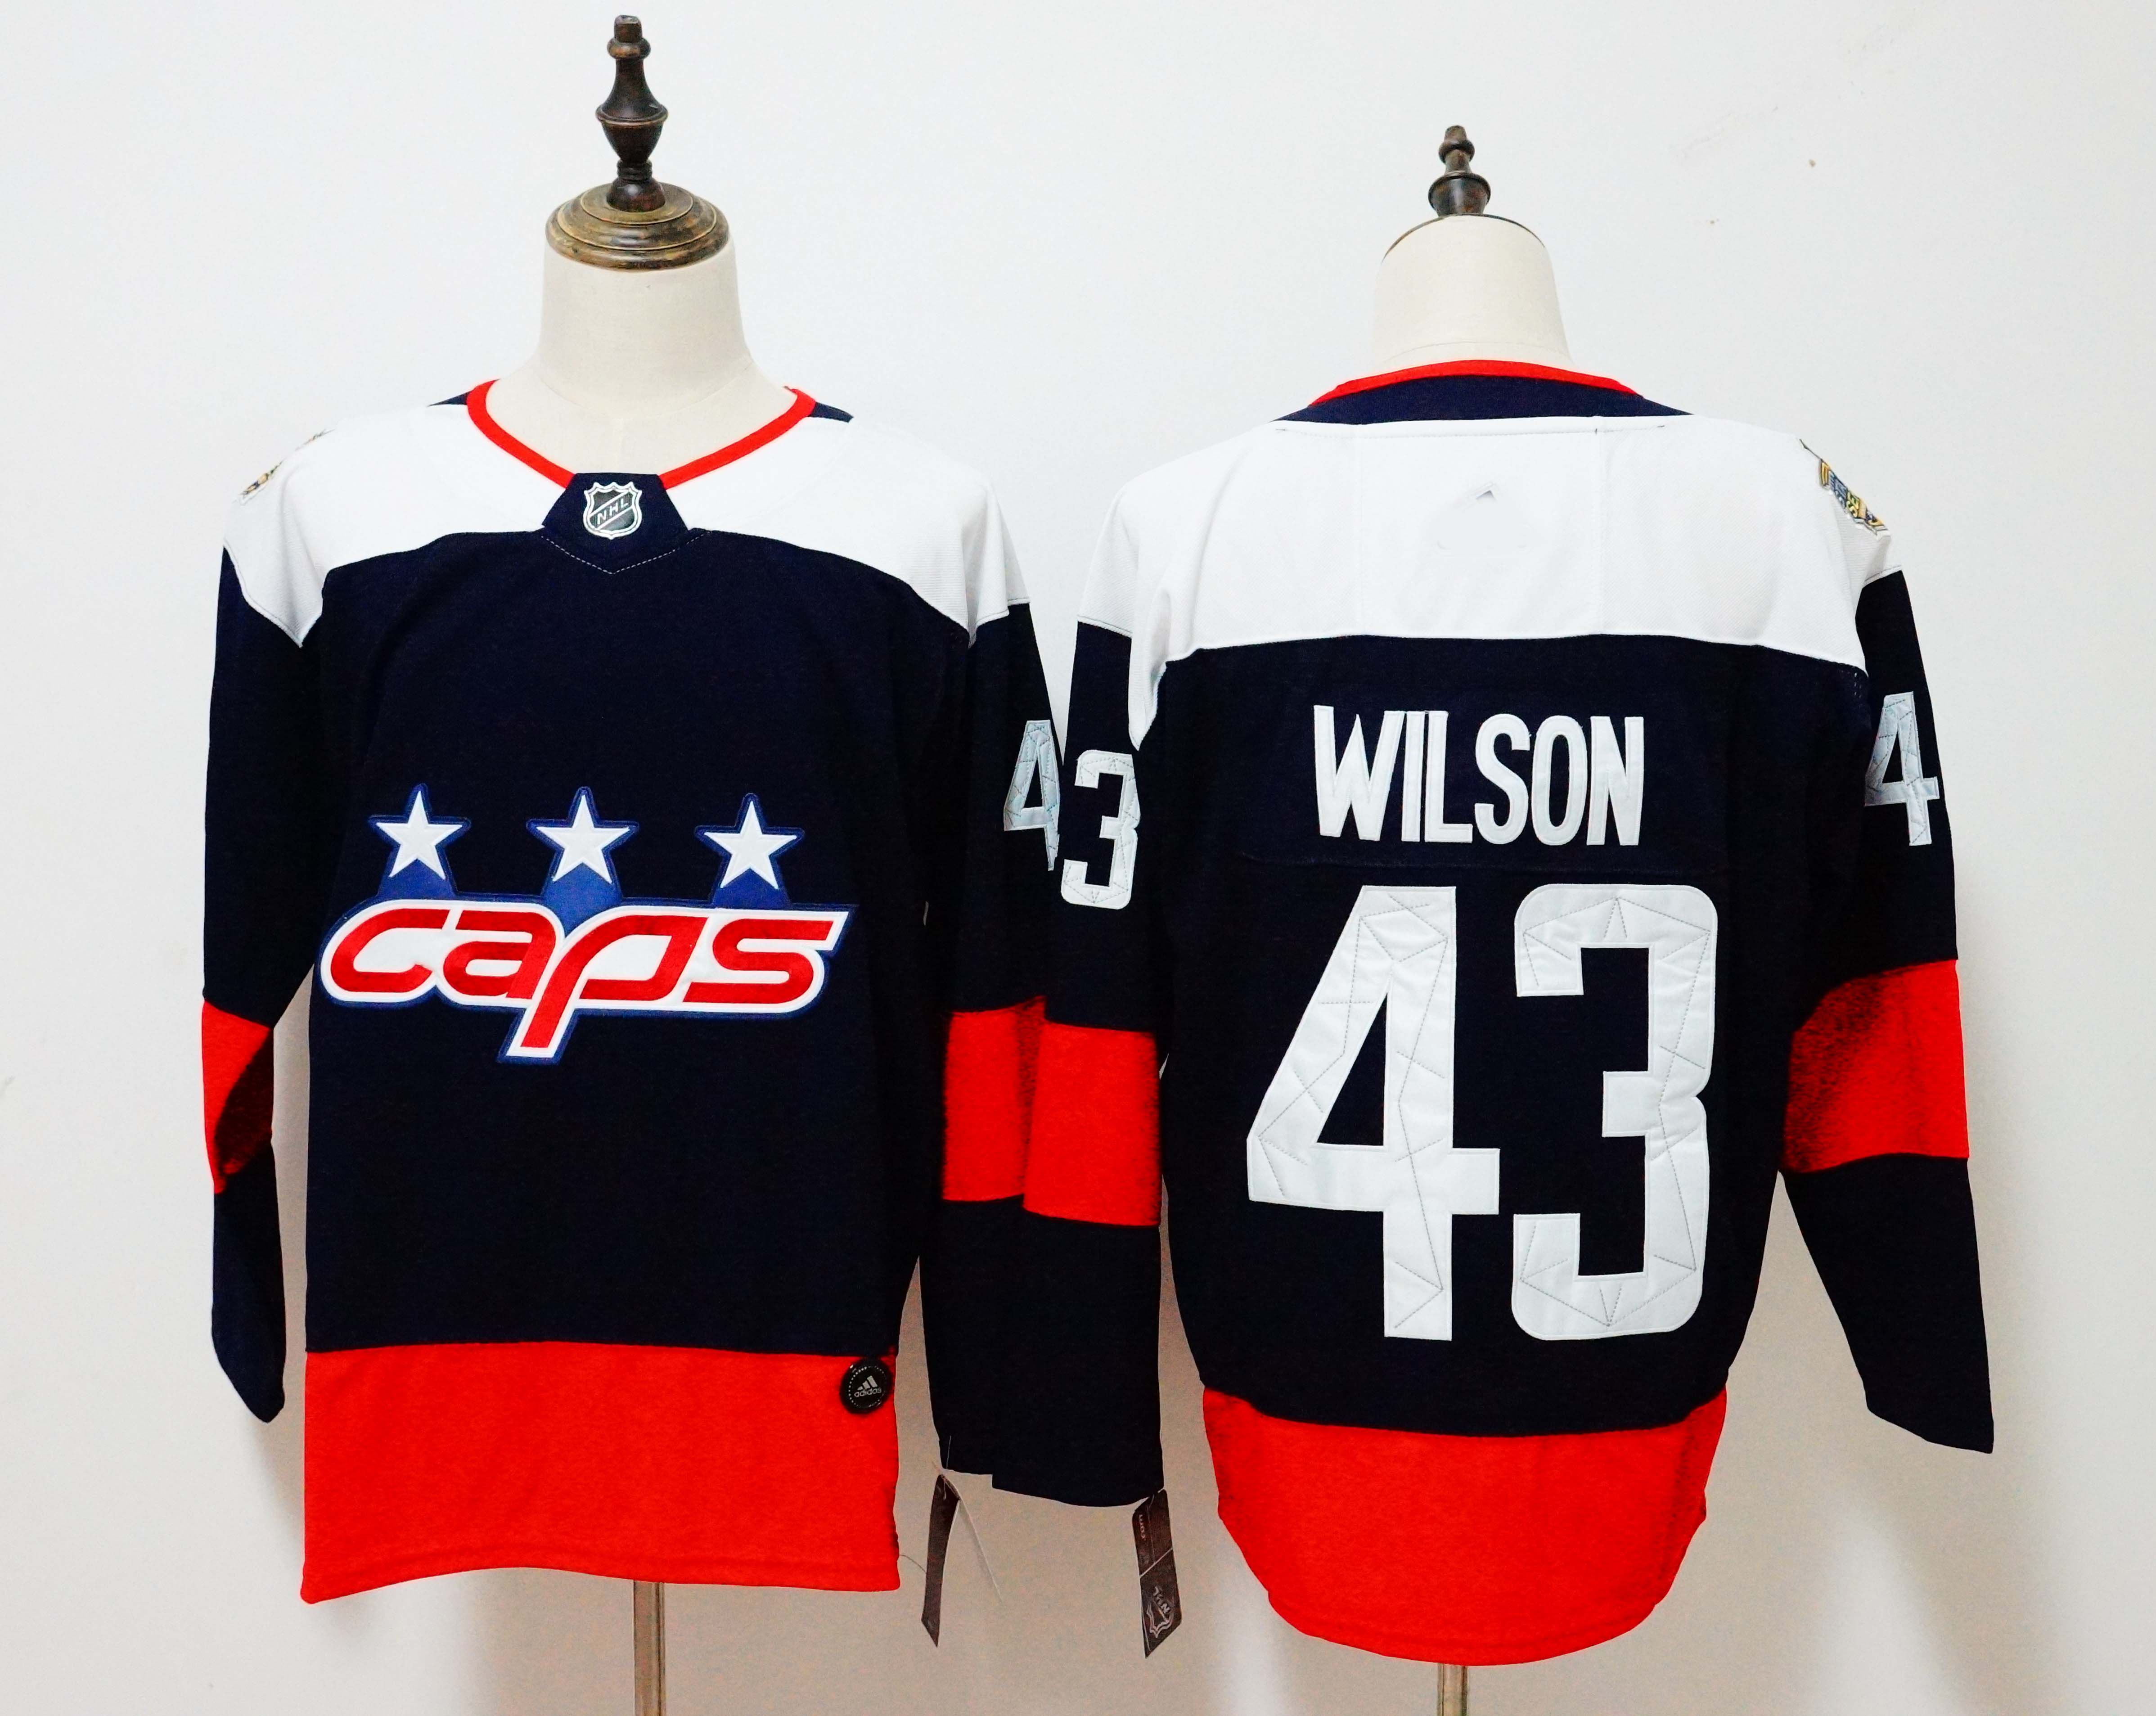 Washington Capitals 华盛顿首都队冰球服 可定做 秋冬球衣